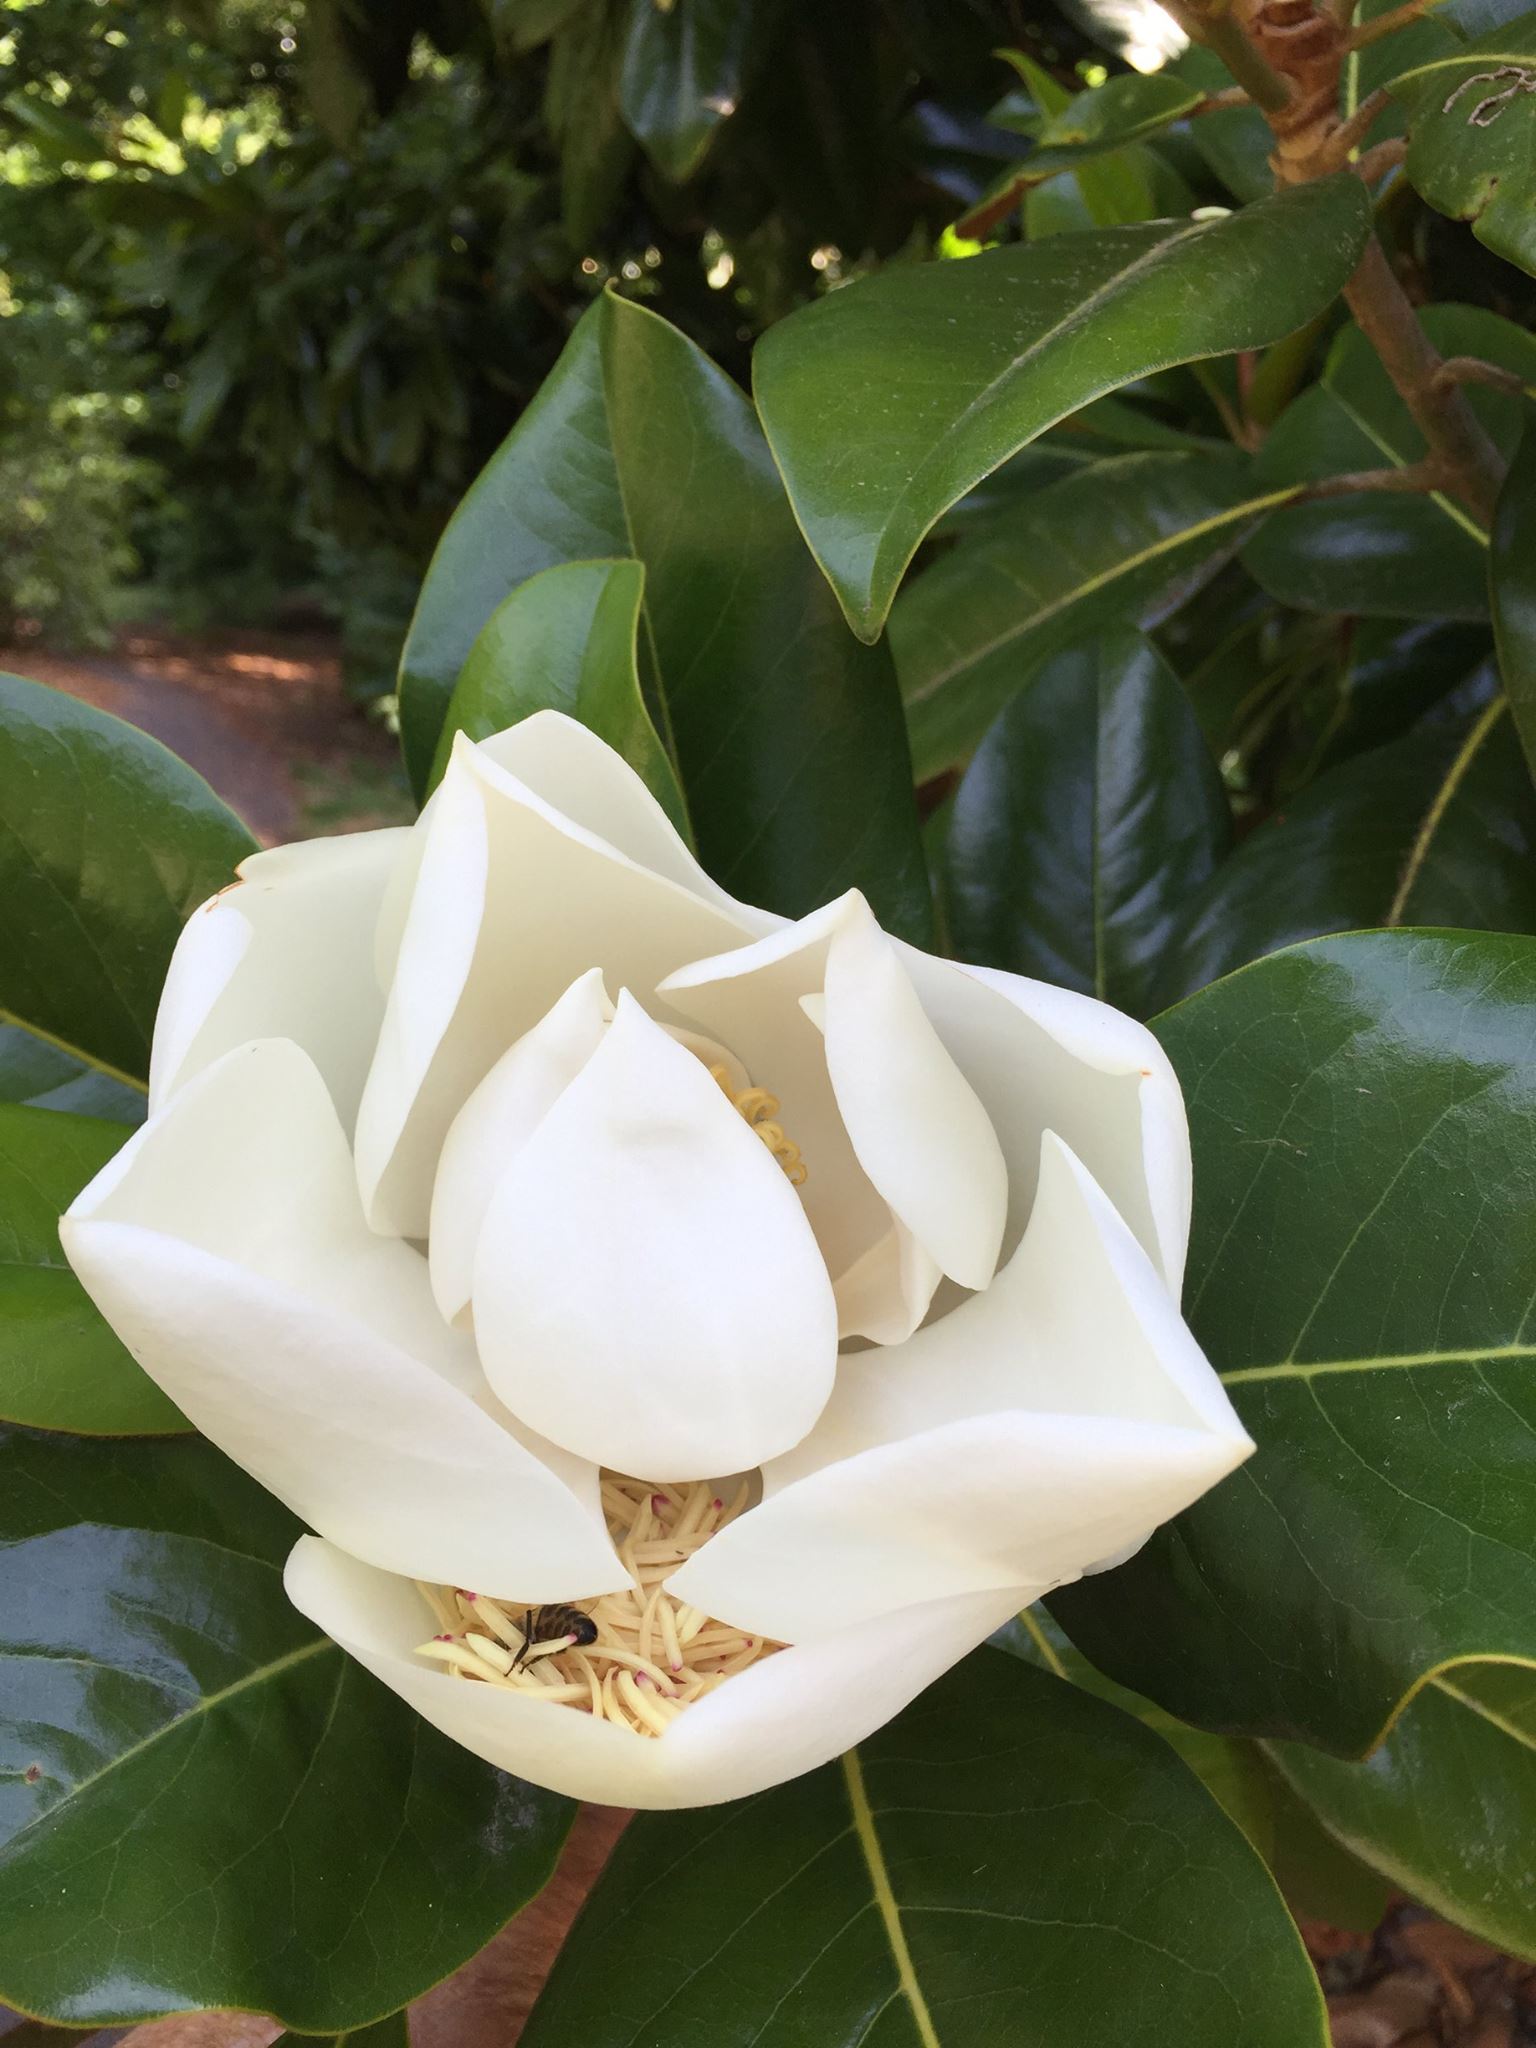 Šácholan velkokvětý - Magnolia grandiflora "Victoria", 50/60 cm